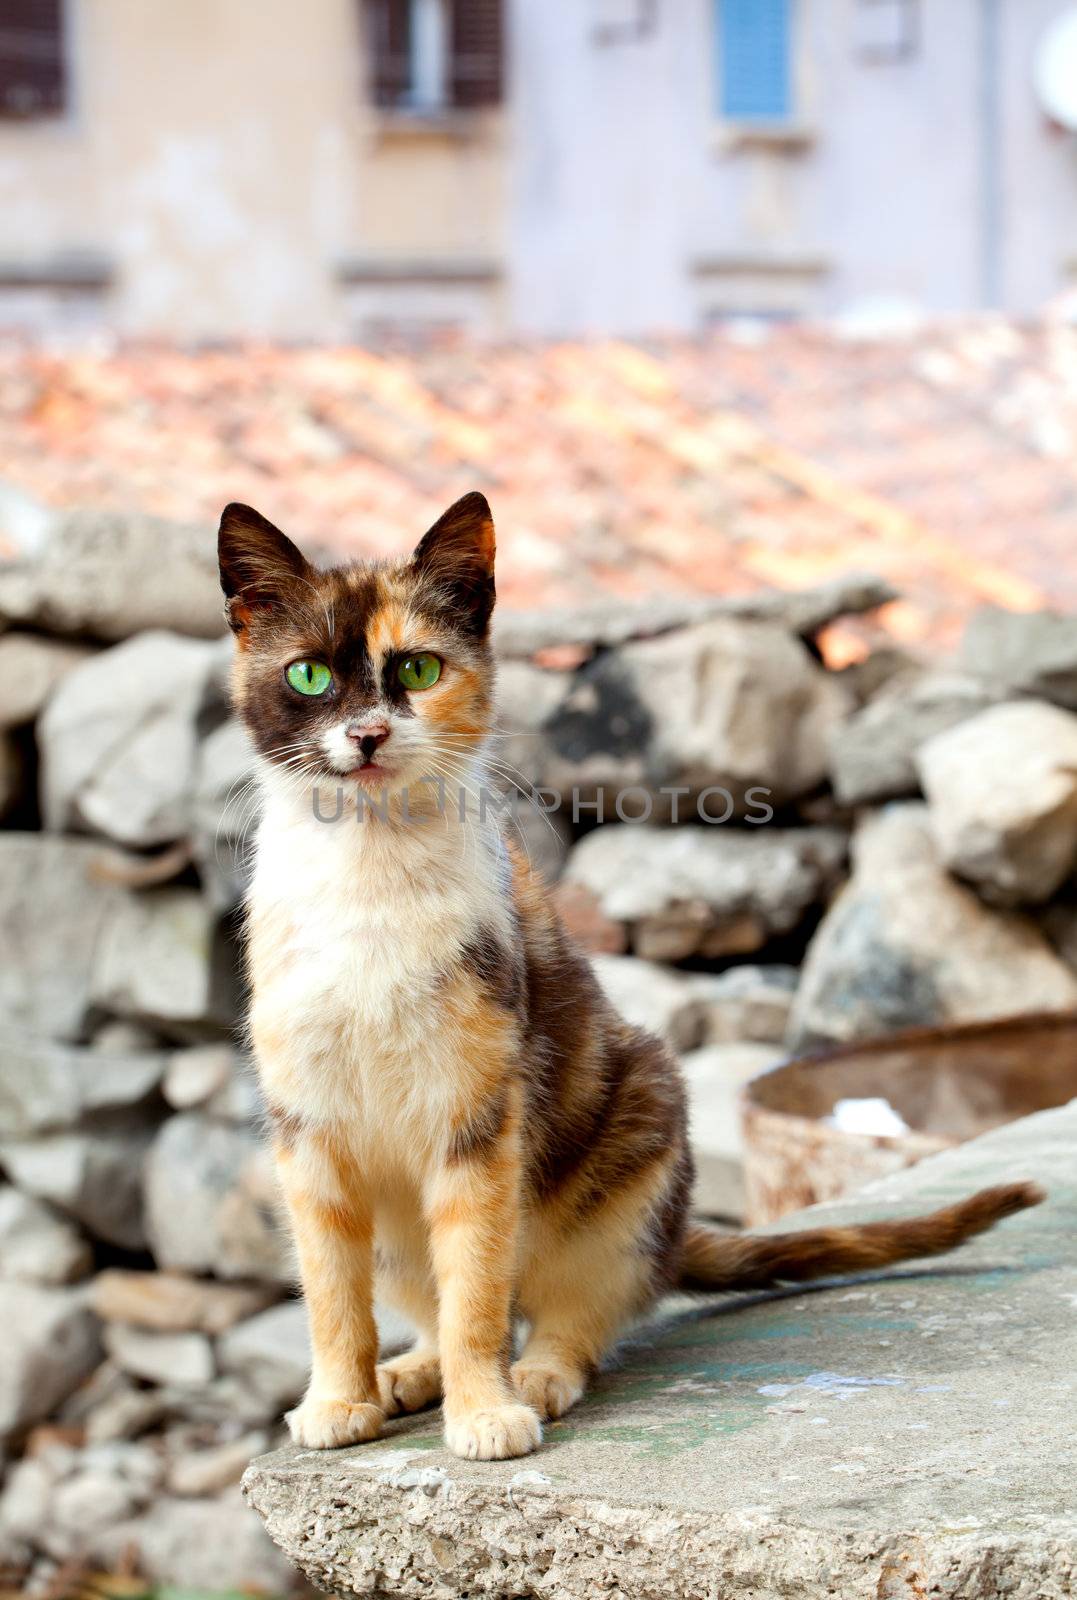 cat with green eyes by motorolka